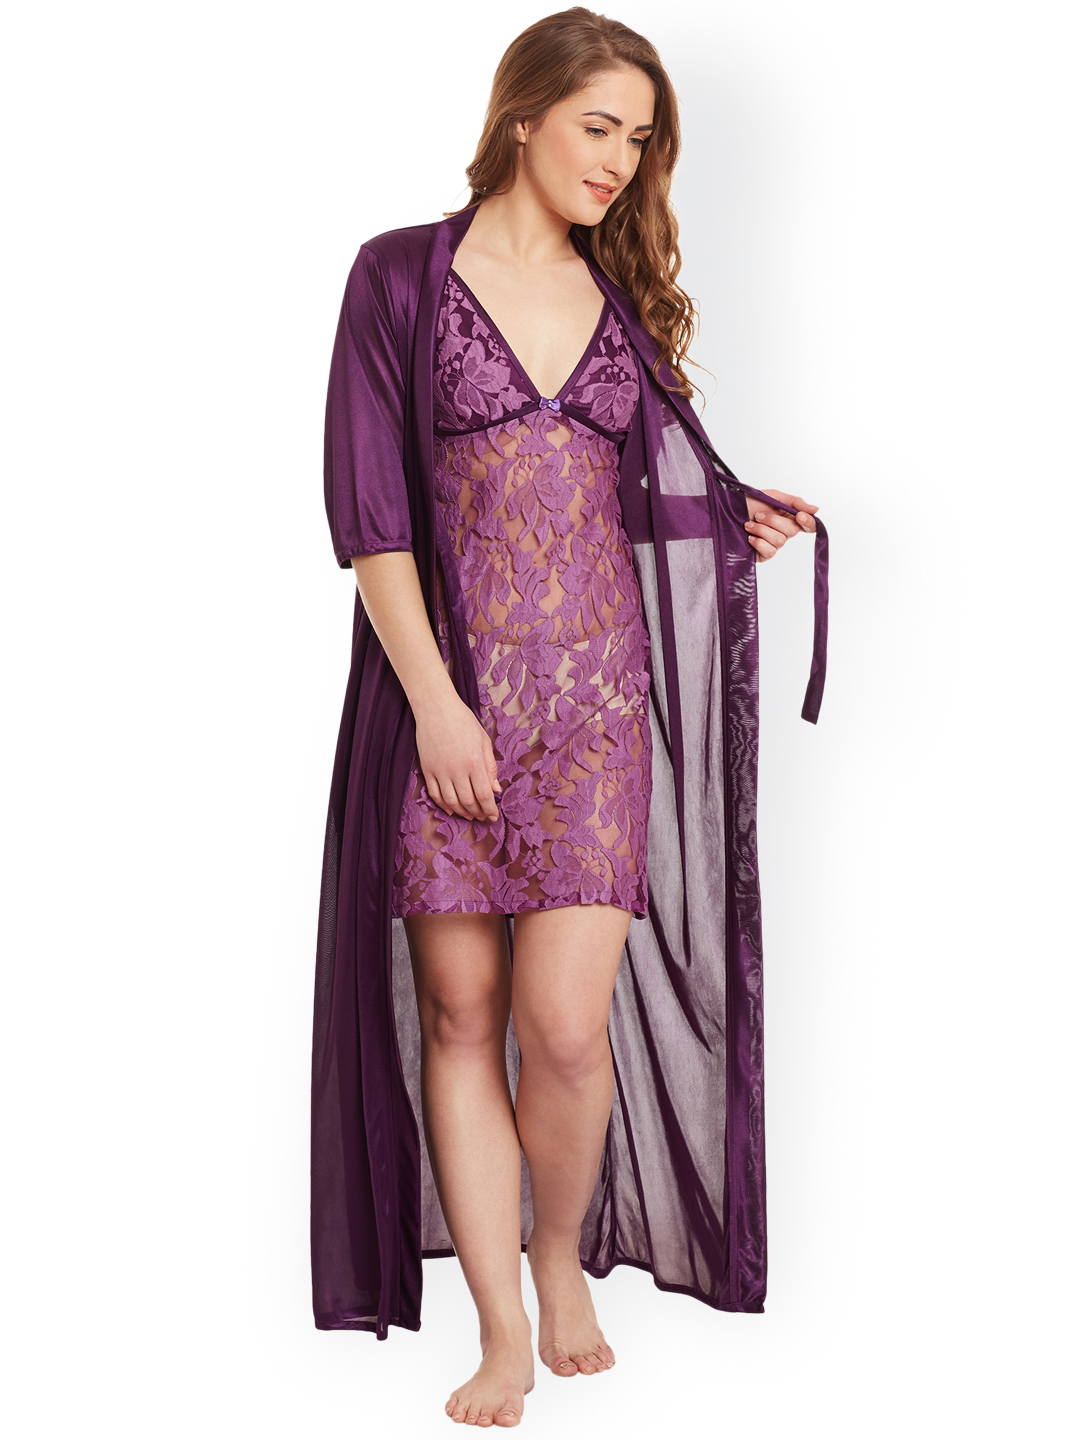 https://nightdress.pk/wp-content/uploads/2019/05/11486024694632-Claura-Purple-Lace-Satin-Nightdress-with-Robe-ST-20-3411486024694267-1.jpg